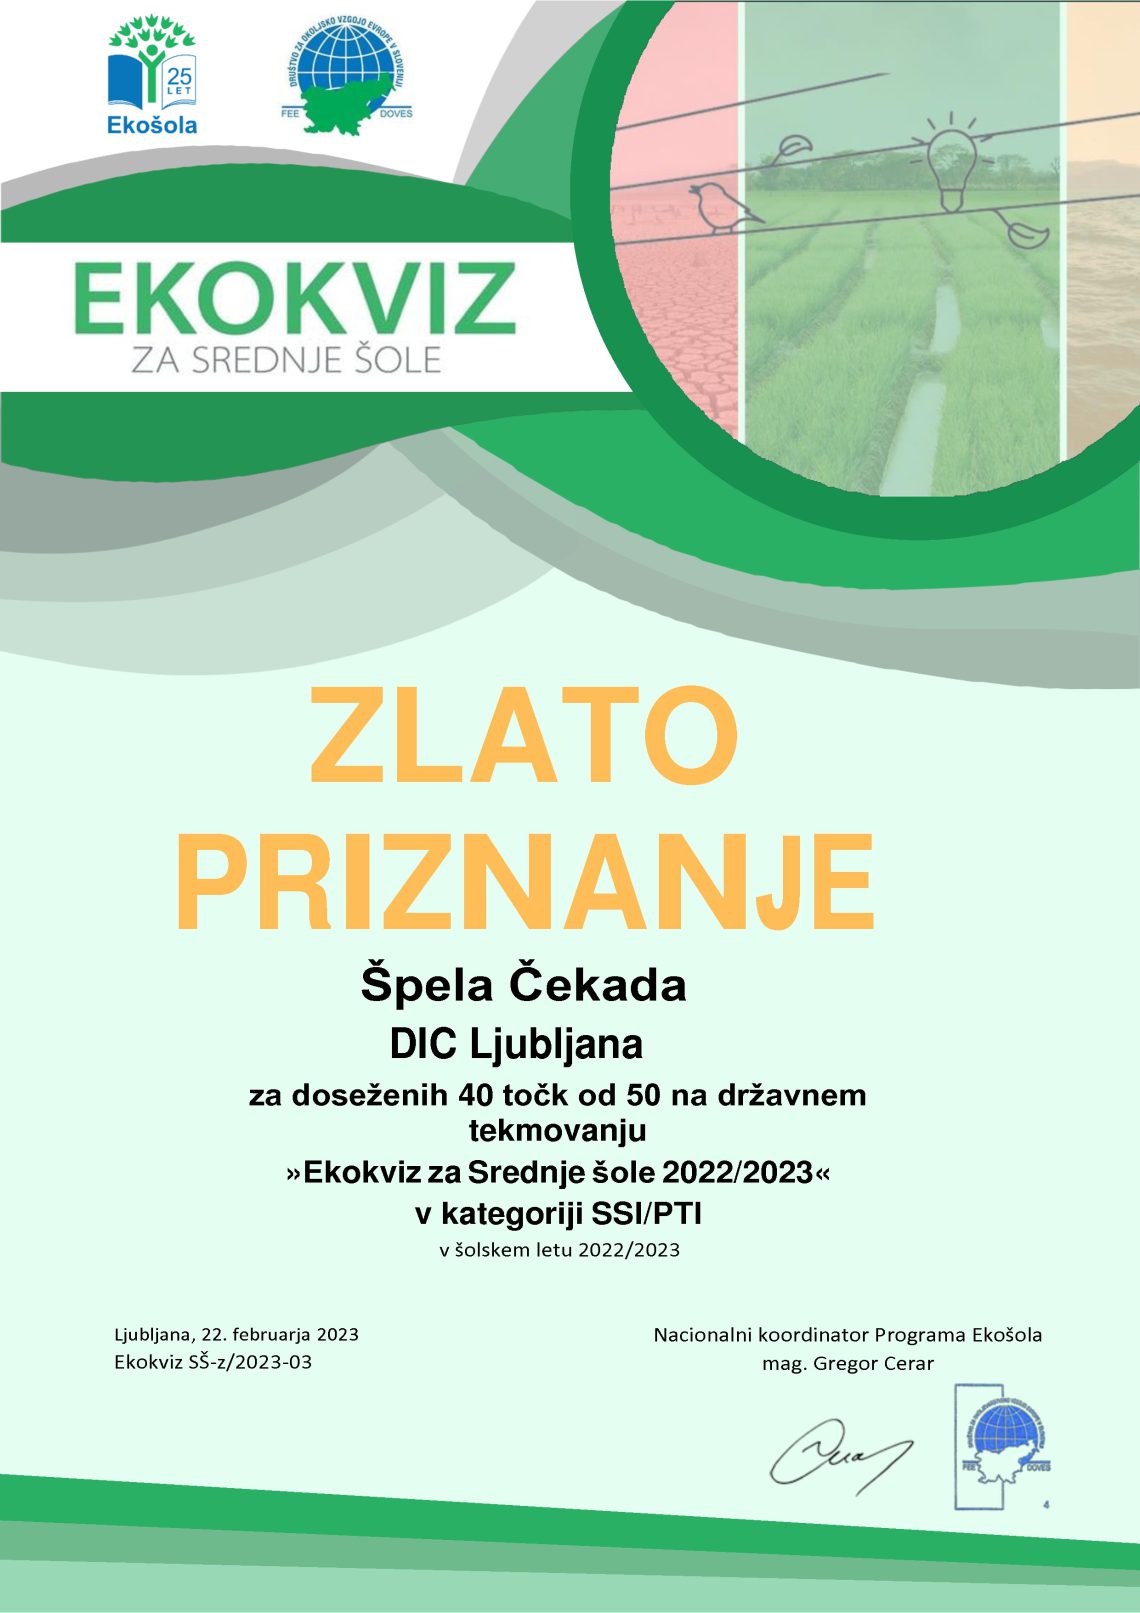 Ekokviz Zlato priznanje Špela Čekada. Ekokviz za srednje šole 2022/2023 v kategoriji SSI PTI